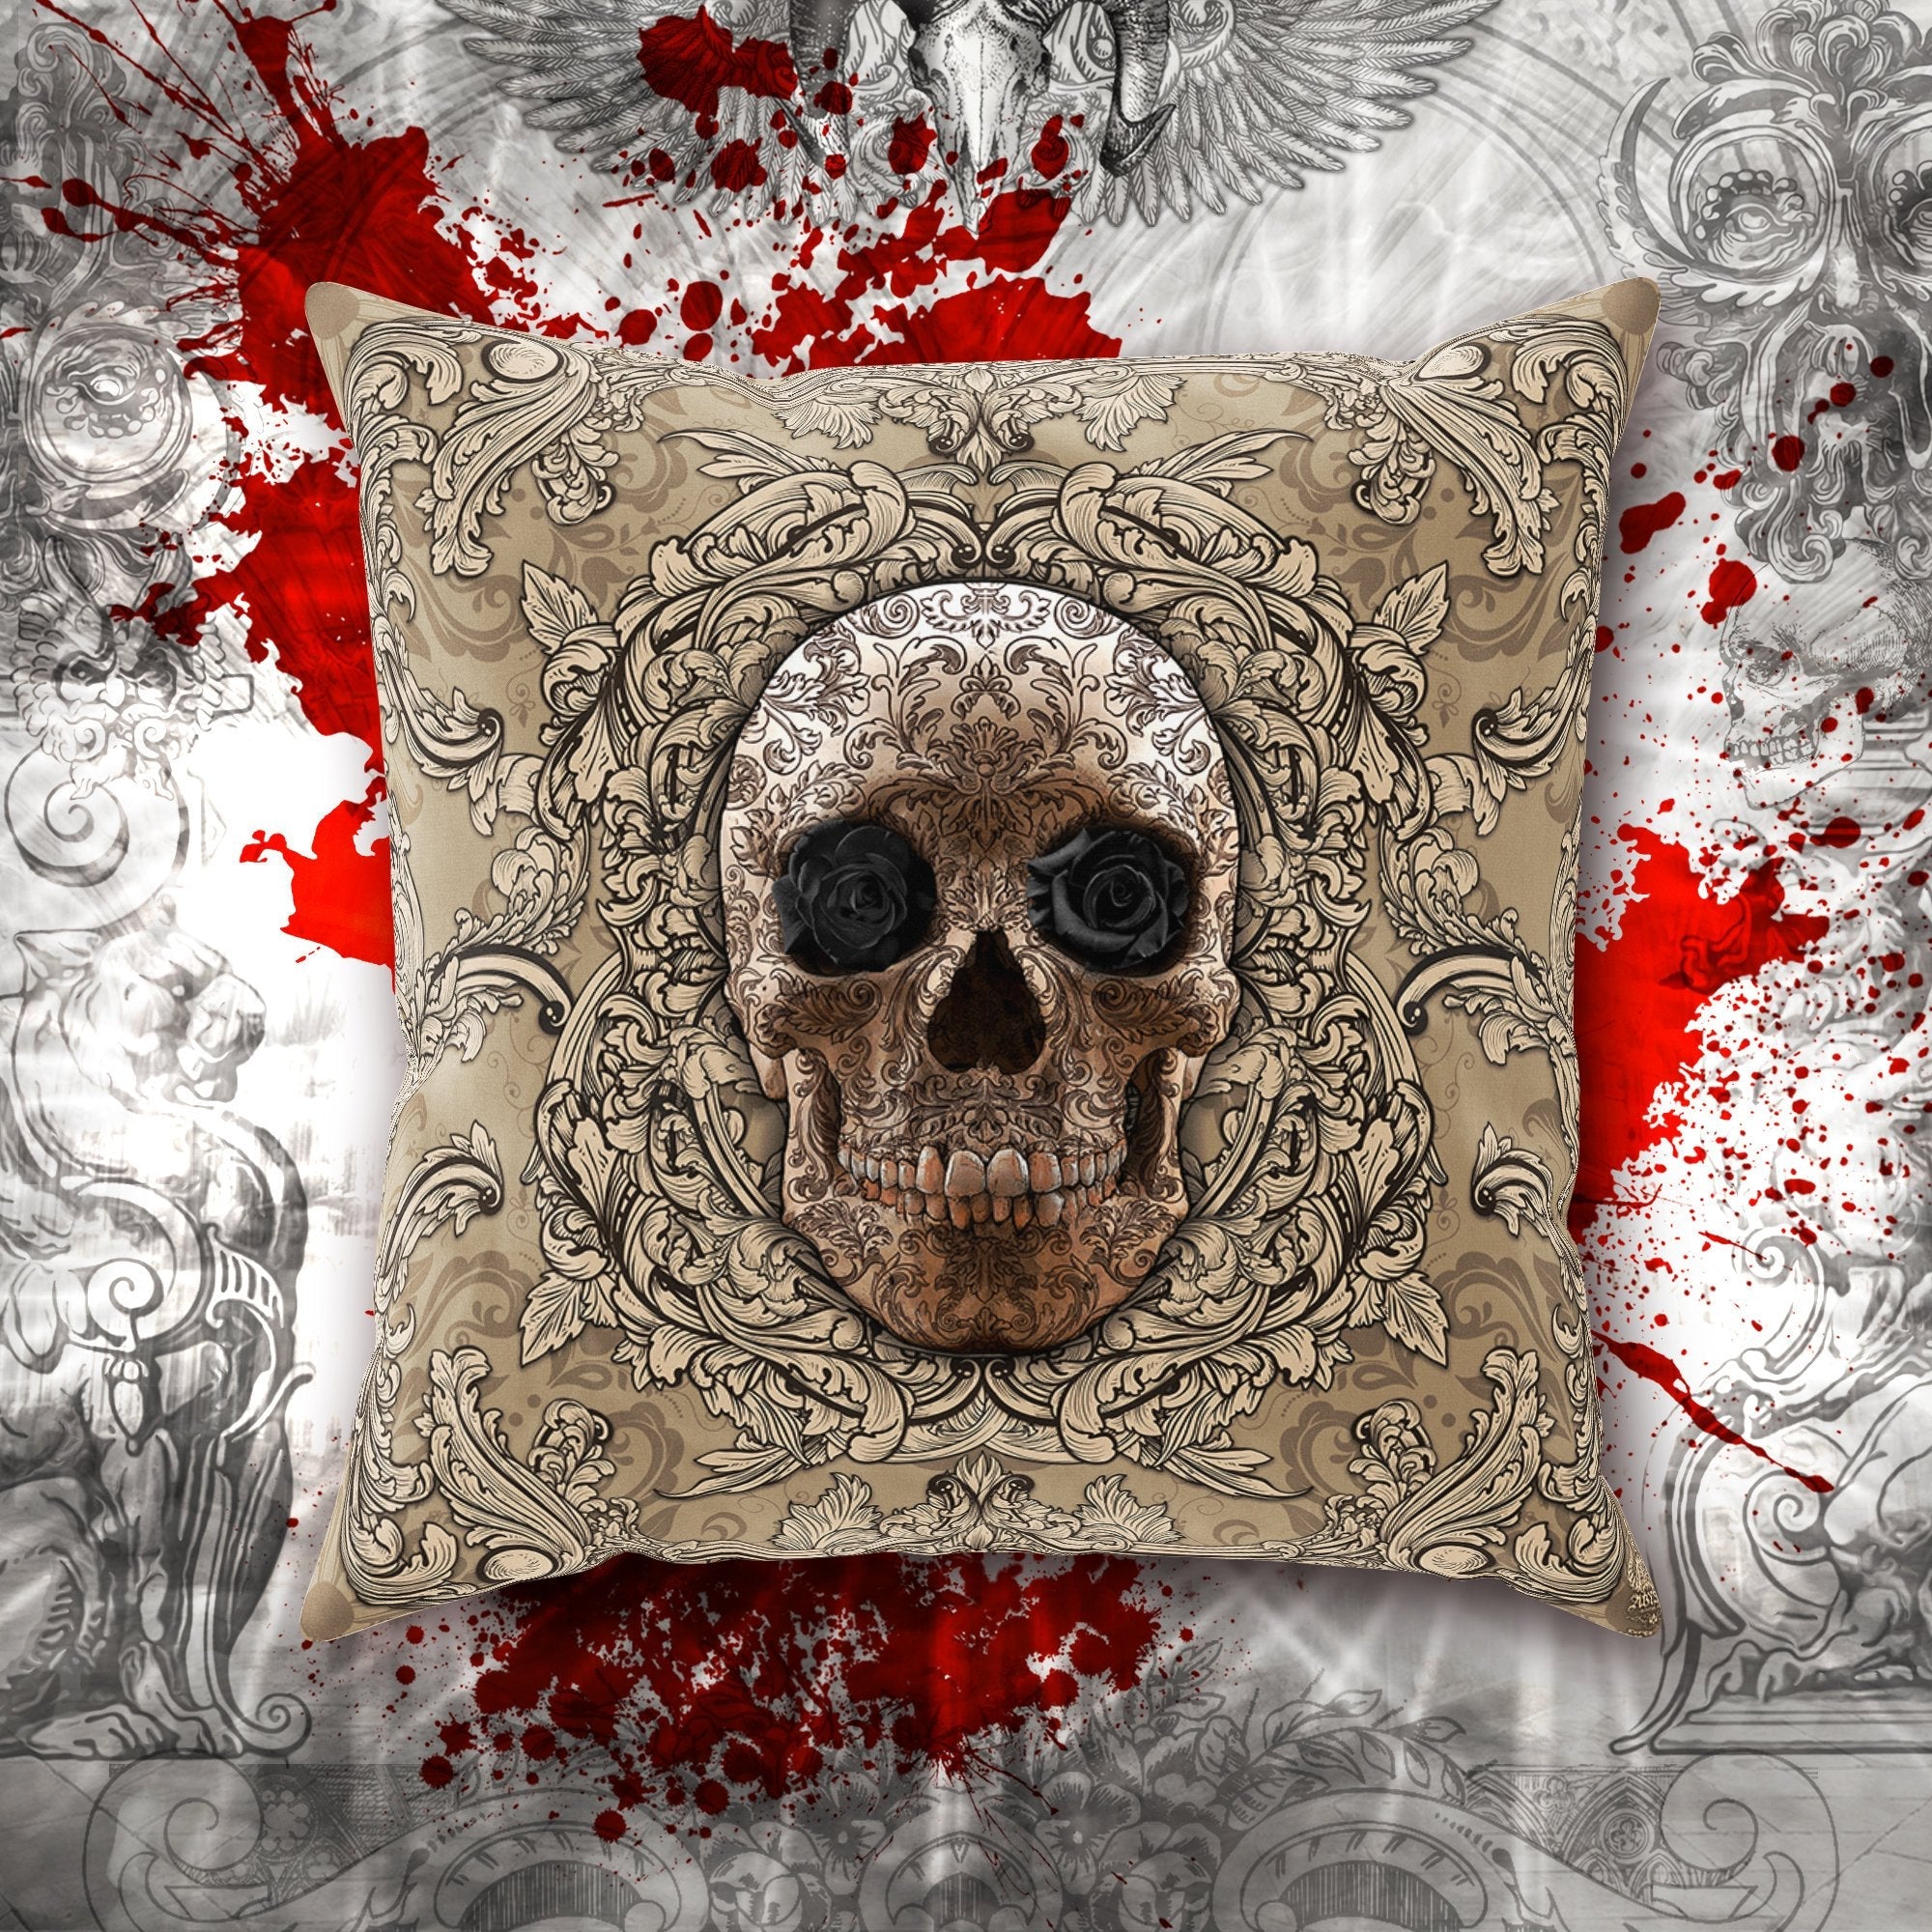 Skull Throw Pillow, Decorative Accent Cushion, Goth Room Decor, Macabre Art, Alternative Home - Cream - Abysm Internal